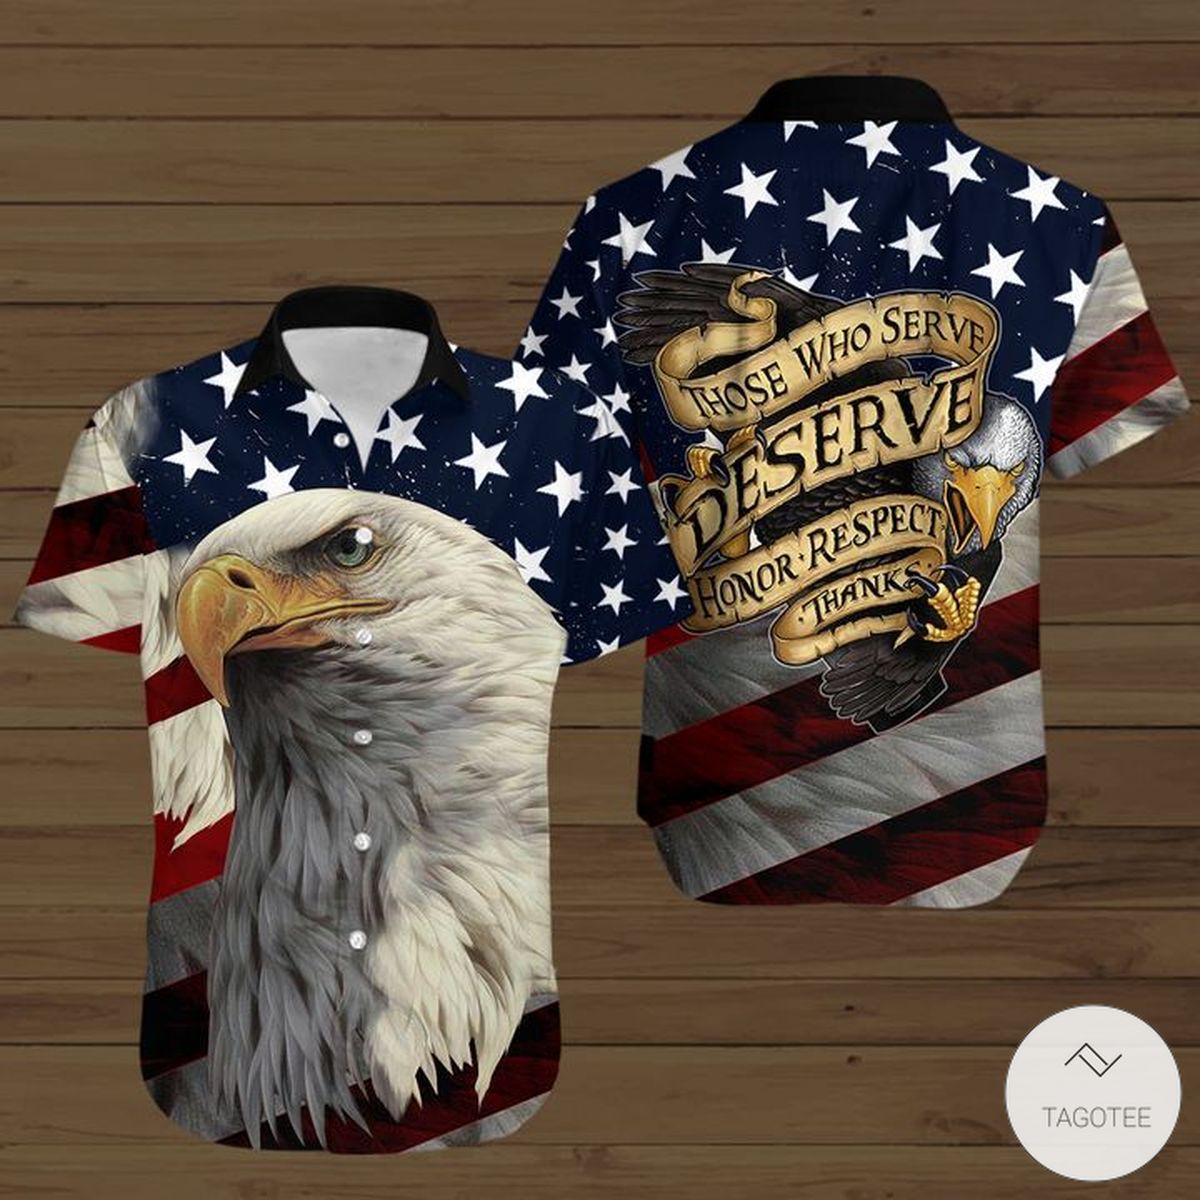 Those-Who-Serve-Deserve-Honor-Respect-Thanks-Button-Shirt